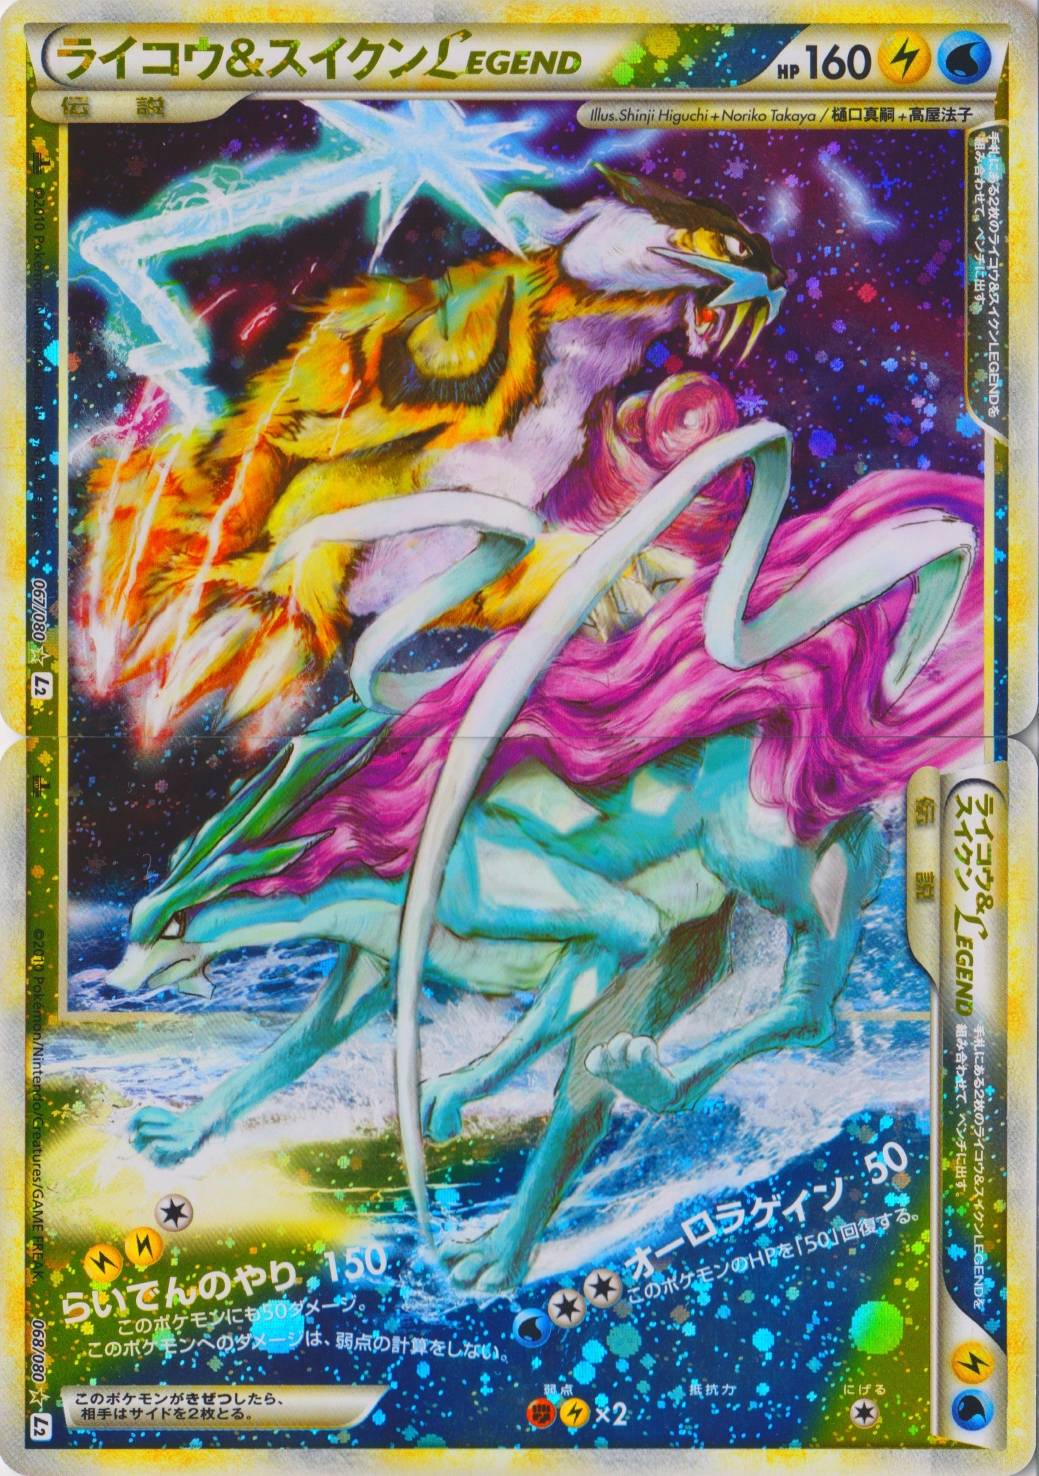 Raikou & Suicune Legend - Pokemon Trading Card Legend , HD Wallpaper & Backgrounds